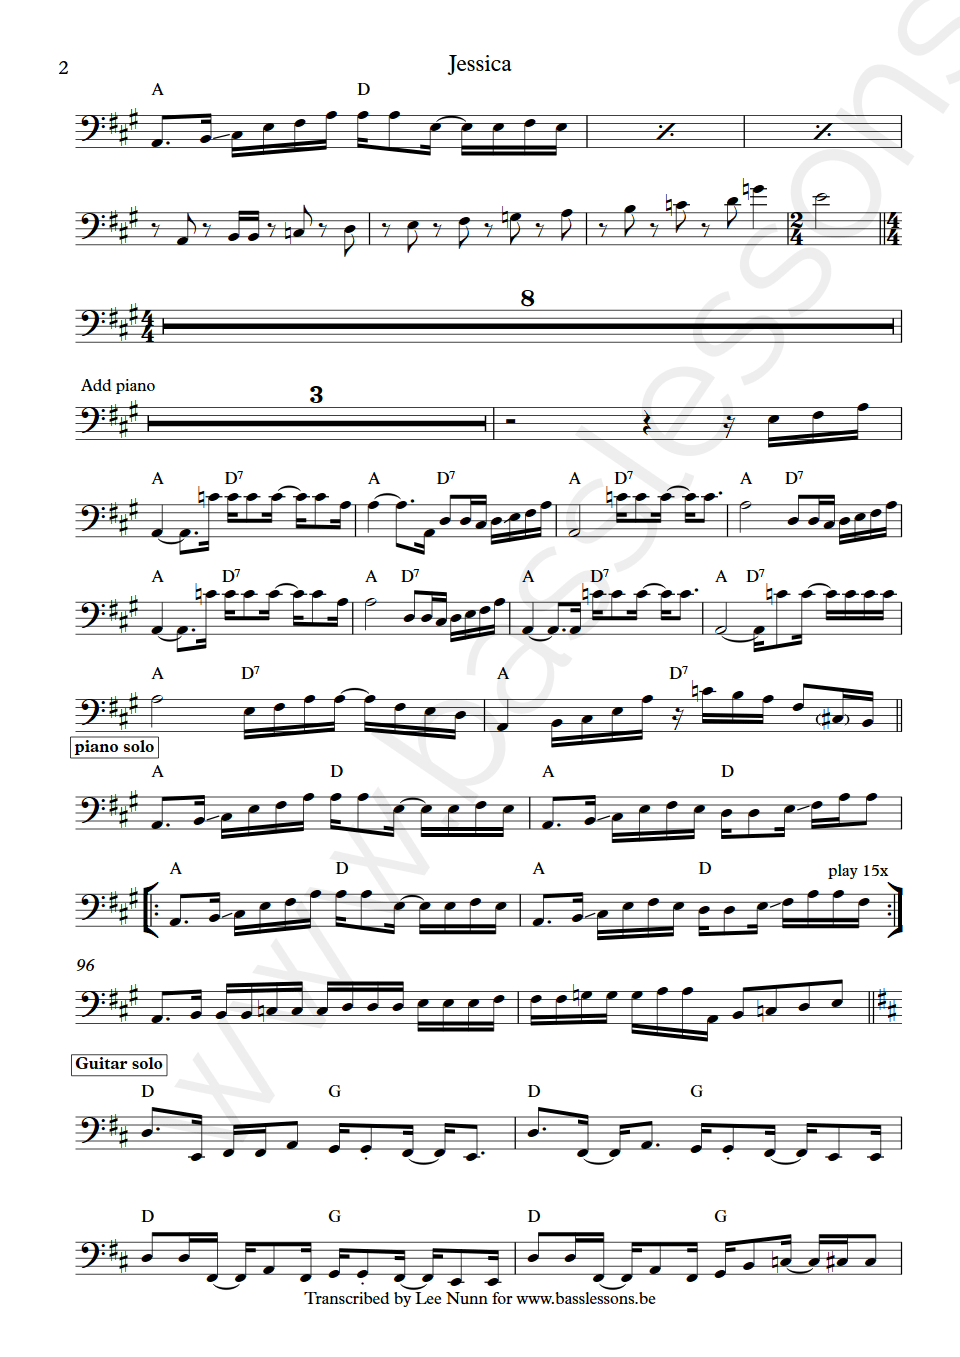 Allman Brothers Band Jessica bass transcription part 2